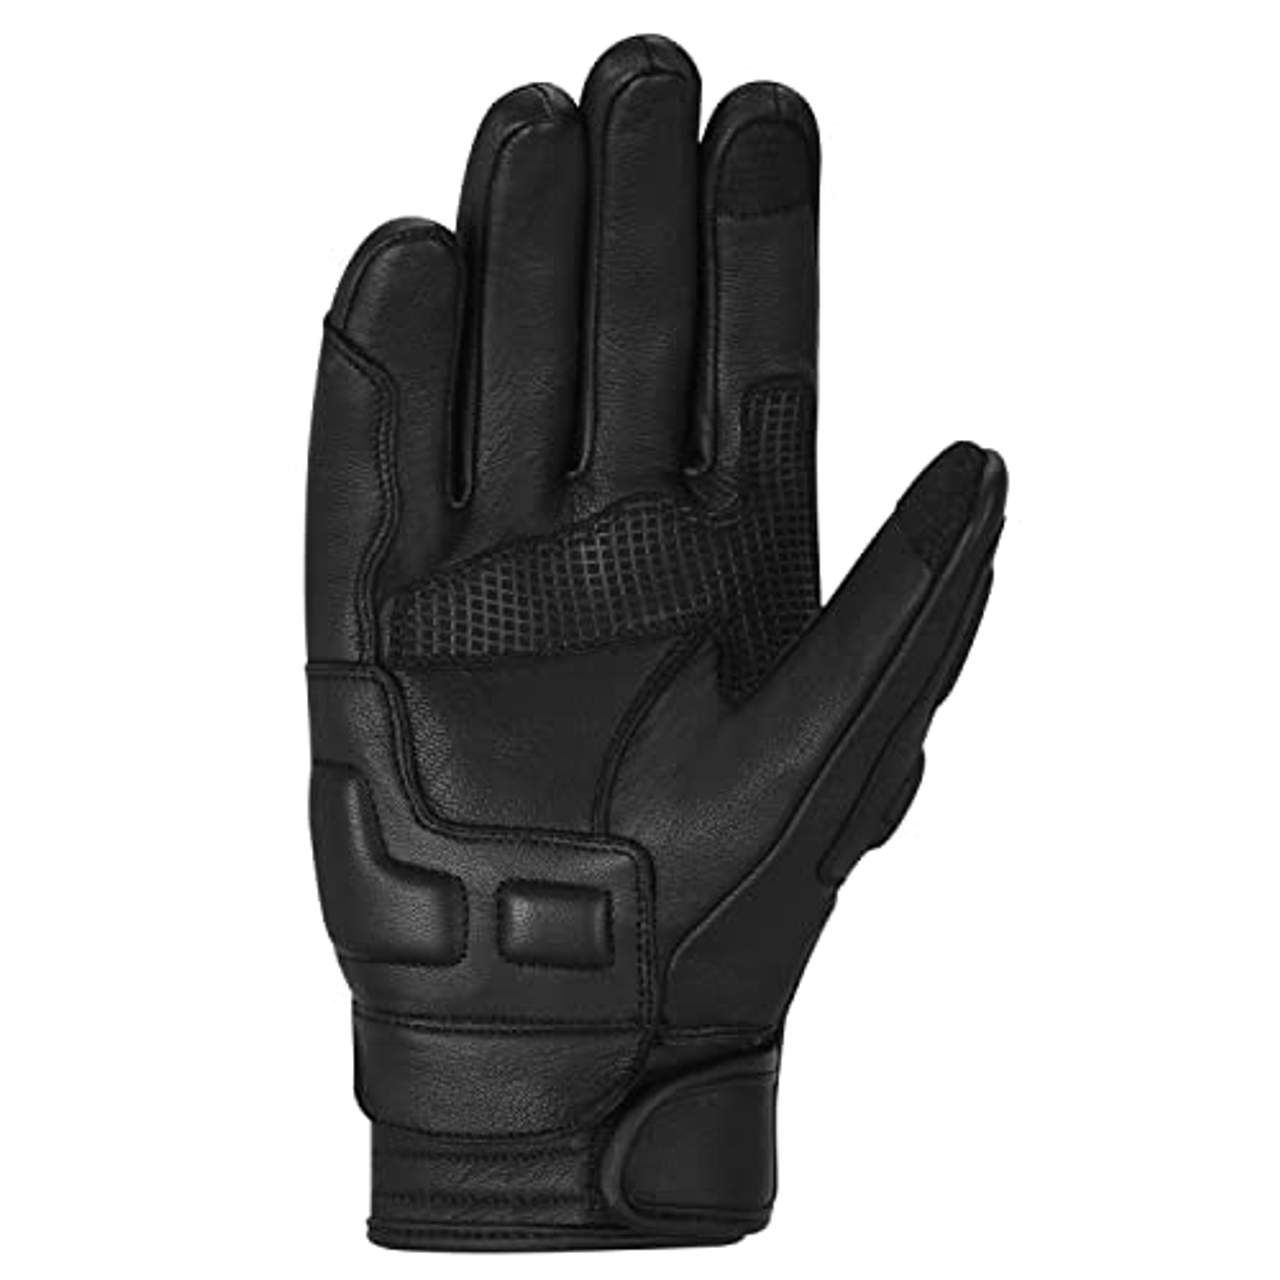 Hand Fellow Premium Leder Motorrad Motorradhandschuhe Touchscreen-Handschuhe